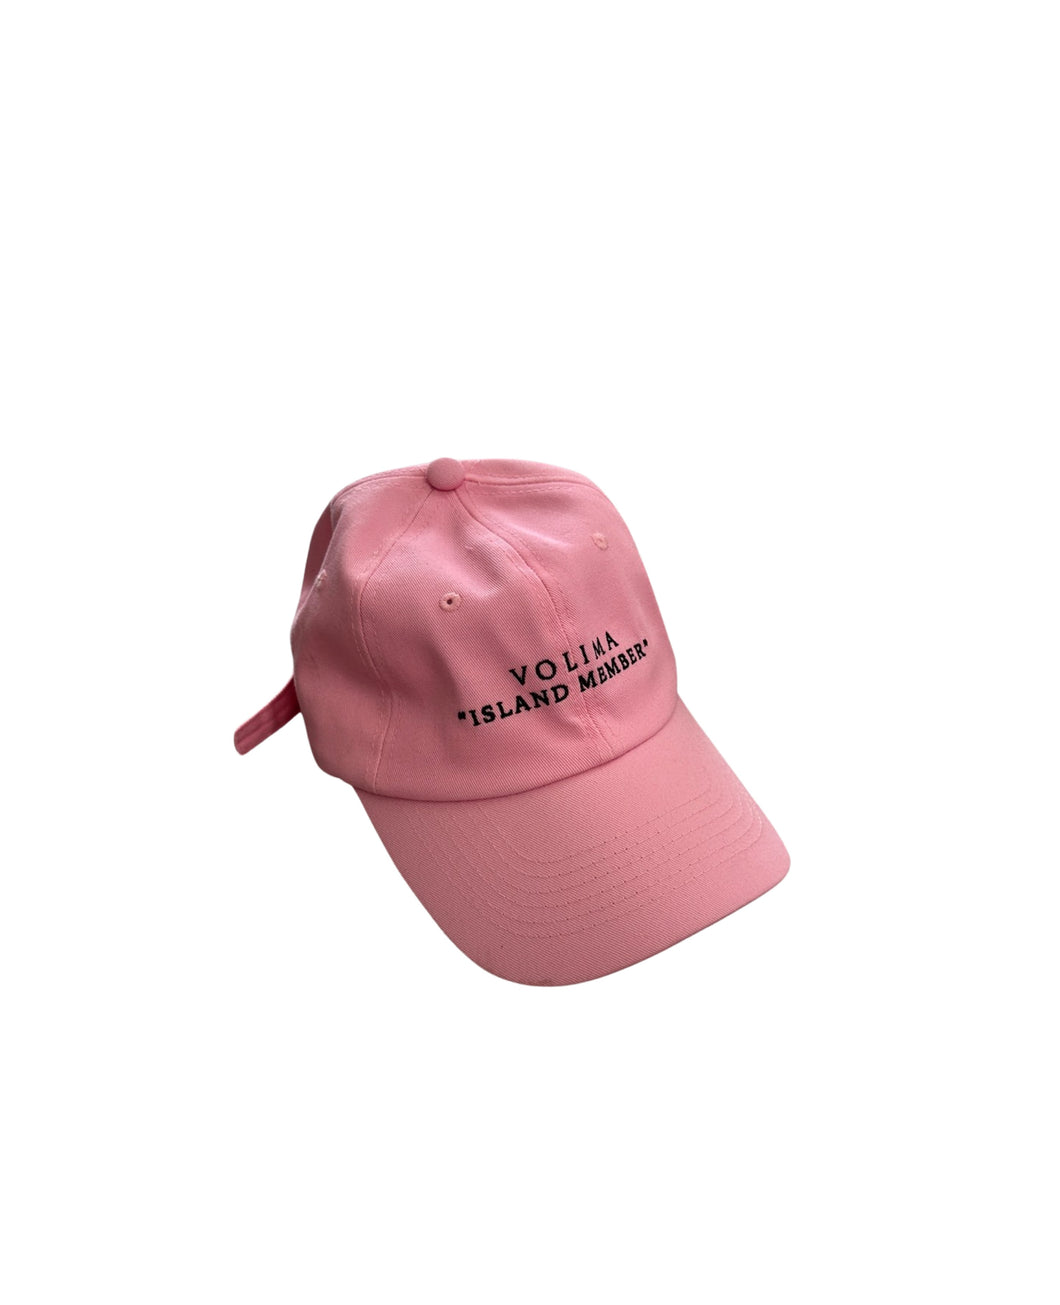 Volima “Island Member” cap - Pink